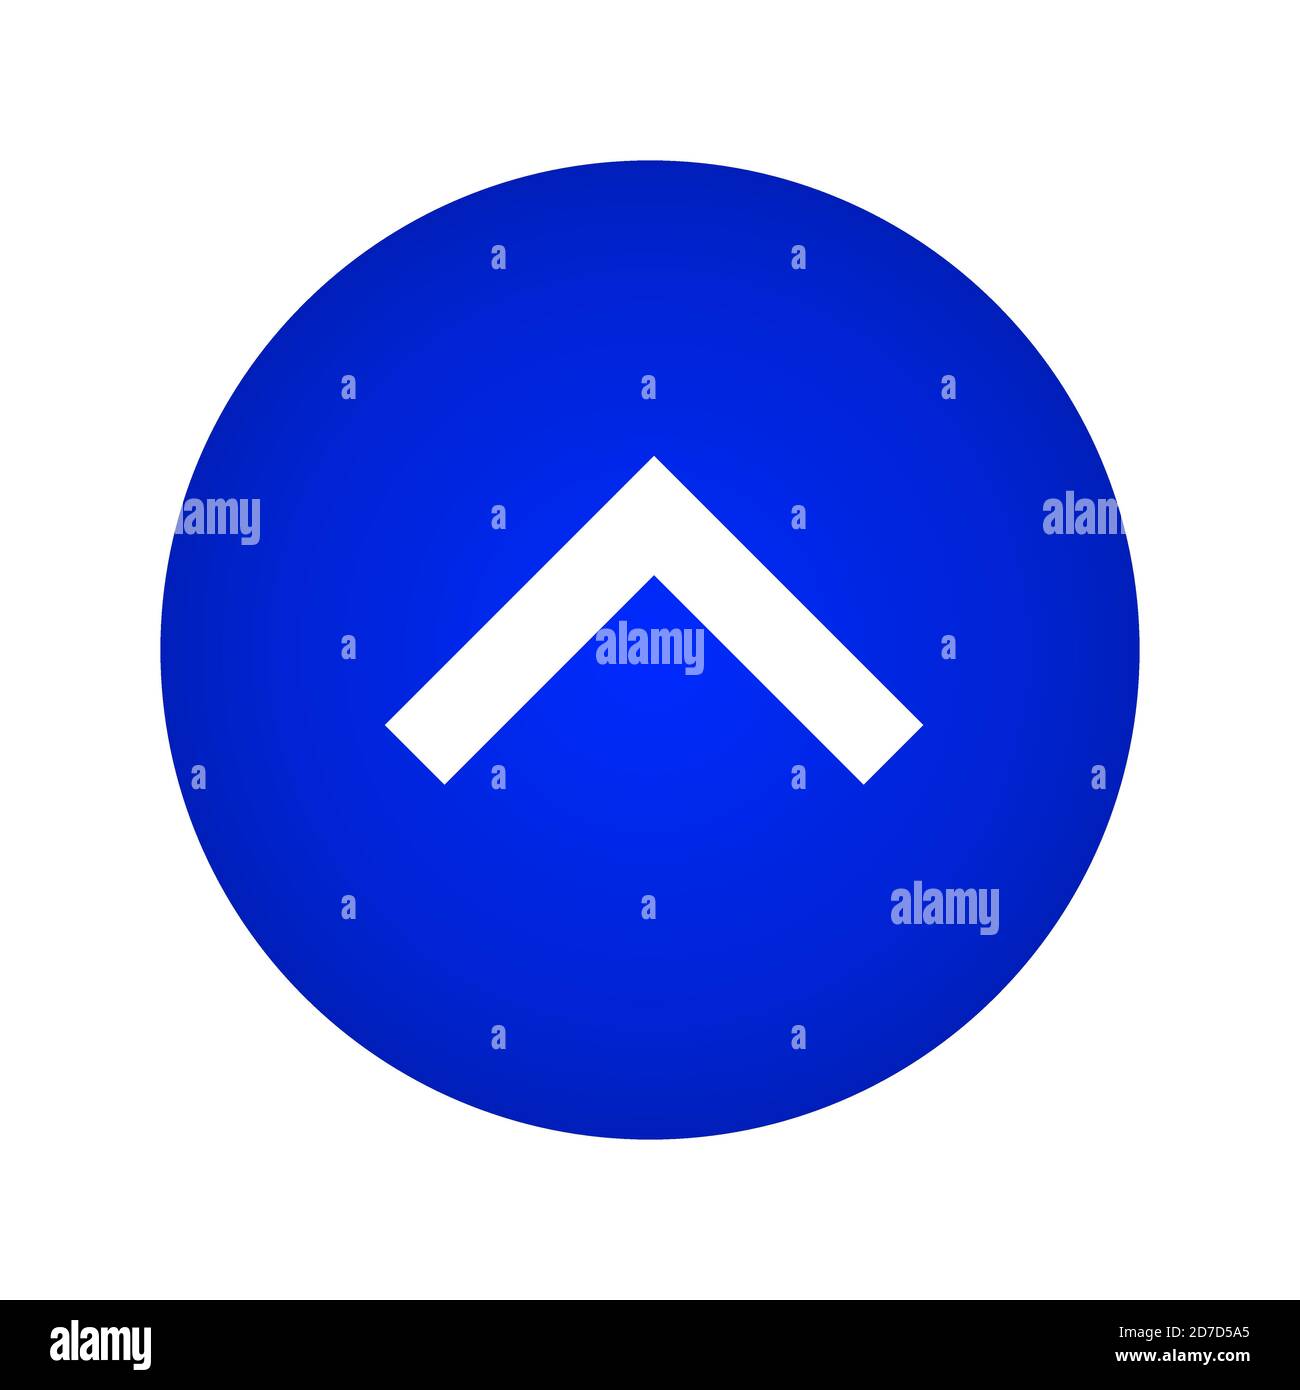 Swipe Arrow icon on a Blue Gradient Circle Shape Stock Vector